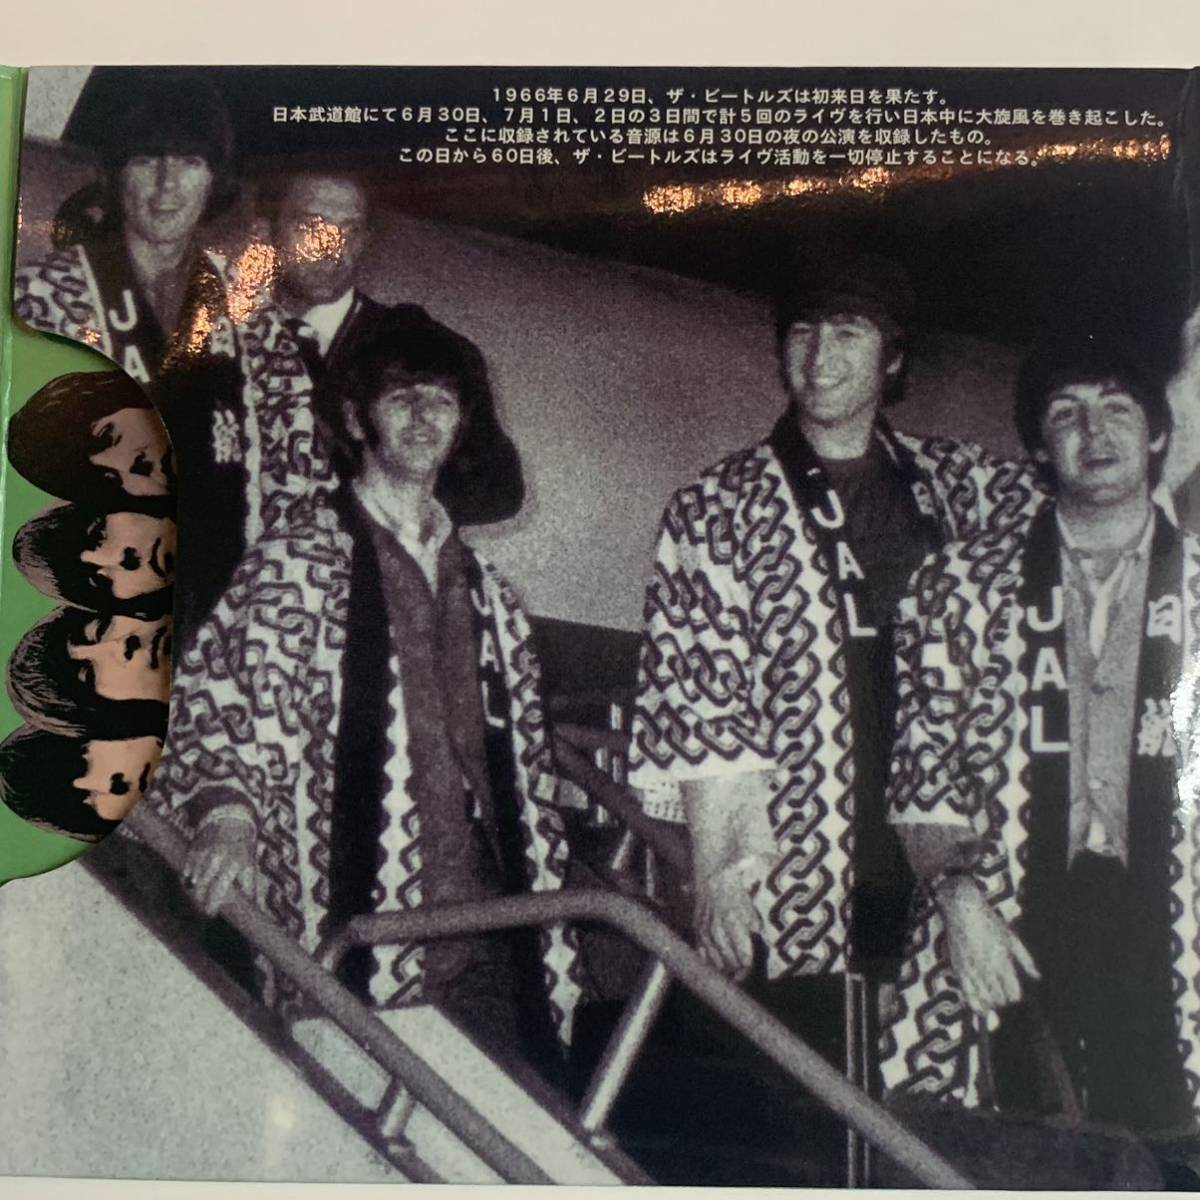 THE BEATLES / LIVE AT BUDOKAN「武道館コンサート」CD 限定サマーセール！ここまで造りこまれた紙ジャケットはまさにコレクター仕様！の画像5